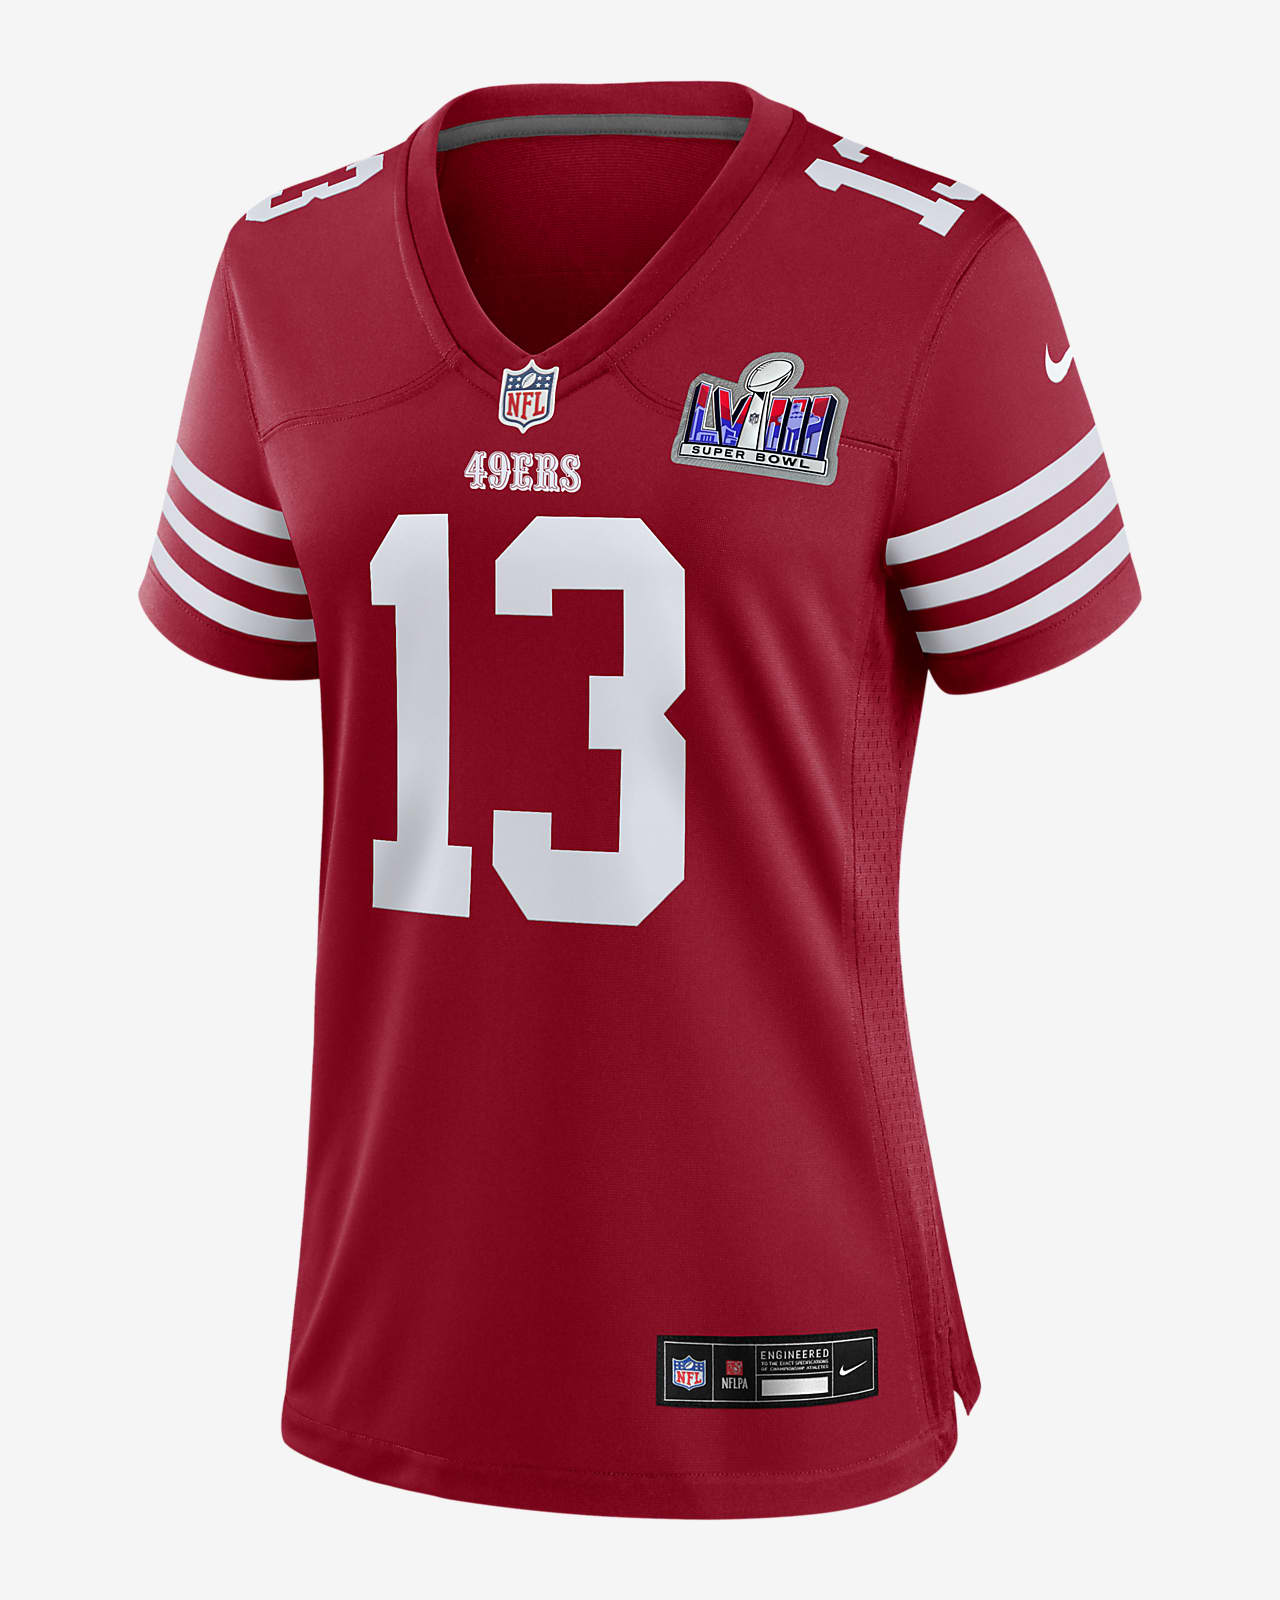 Jersey Nike de la NFL Game para mujer Brock Purdy San Francisco 49ers Super Bowl LVIII